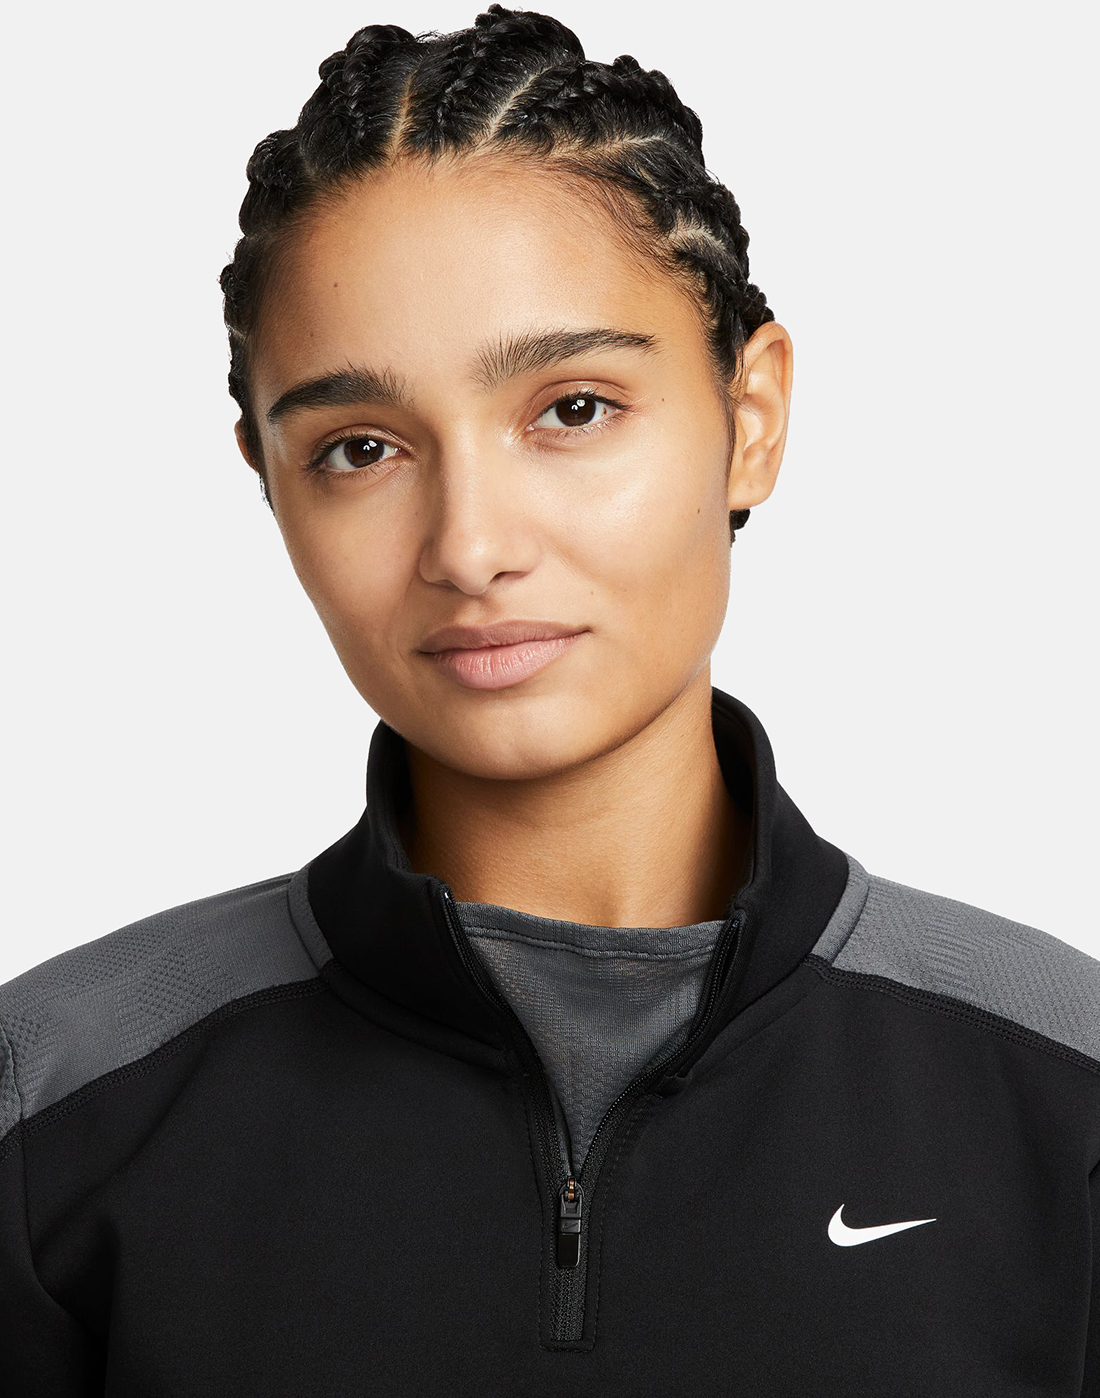 Nike Women's Long-Sleeve 1/4-Zip Training Top - Black | Life Style ...